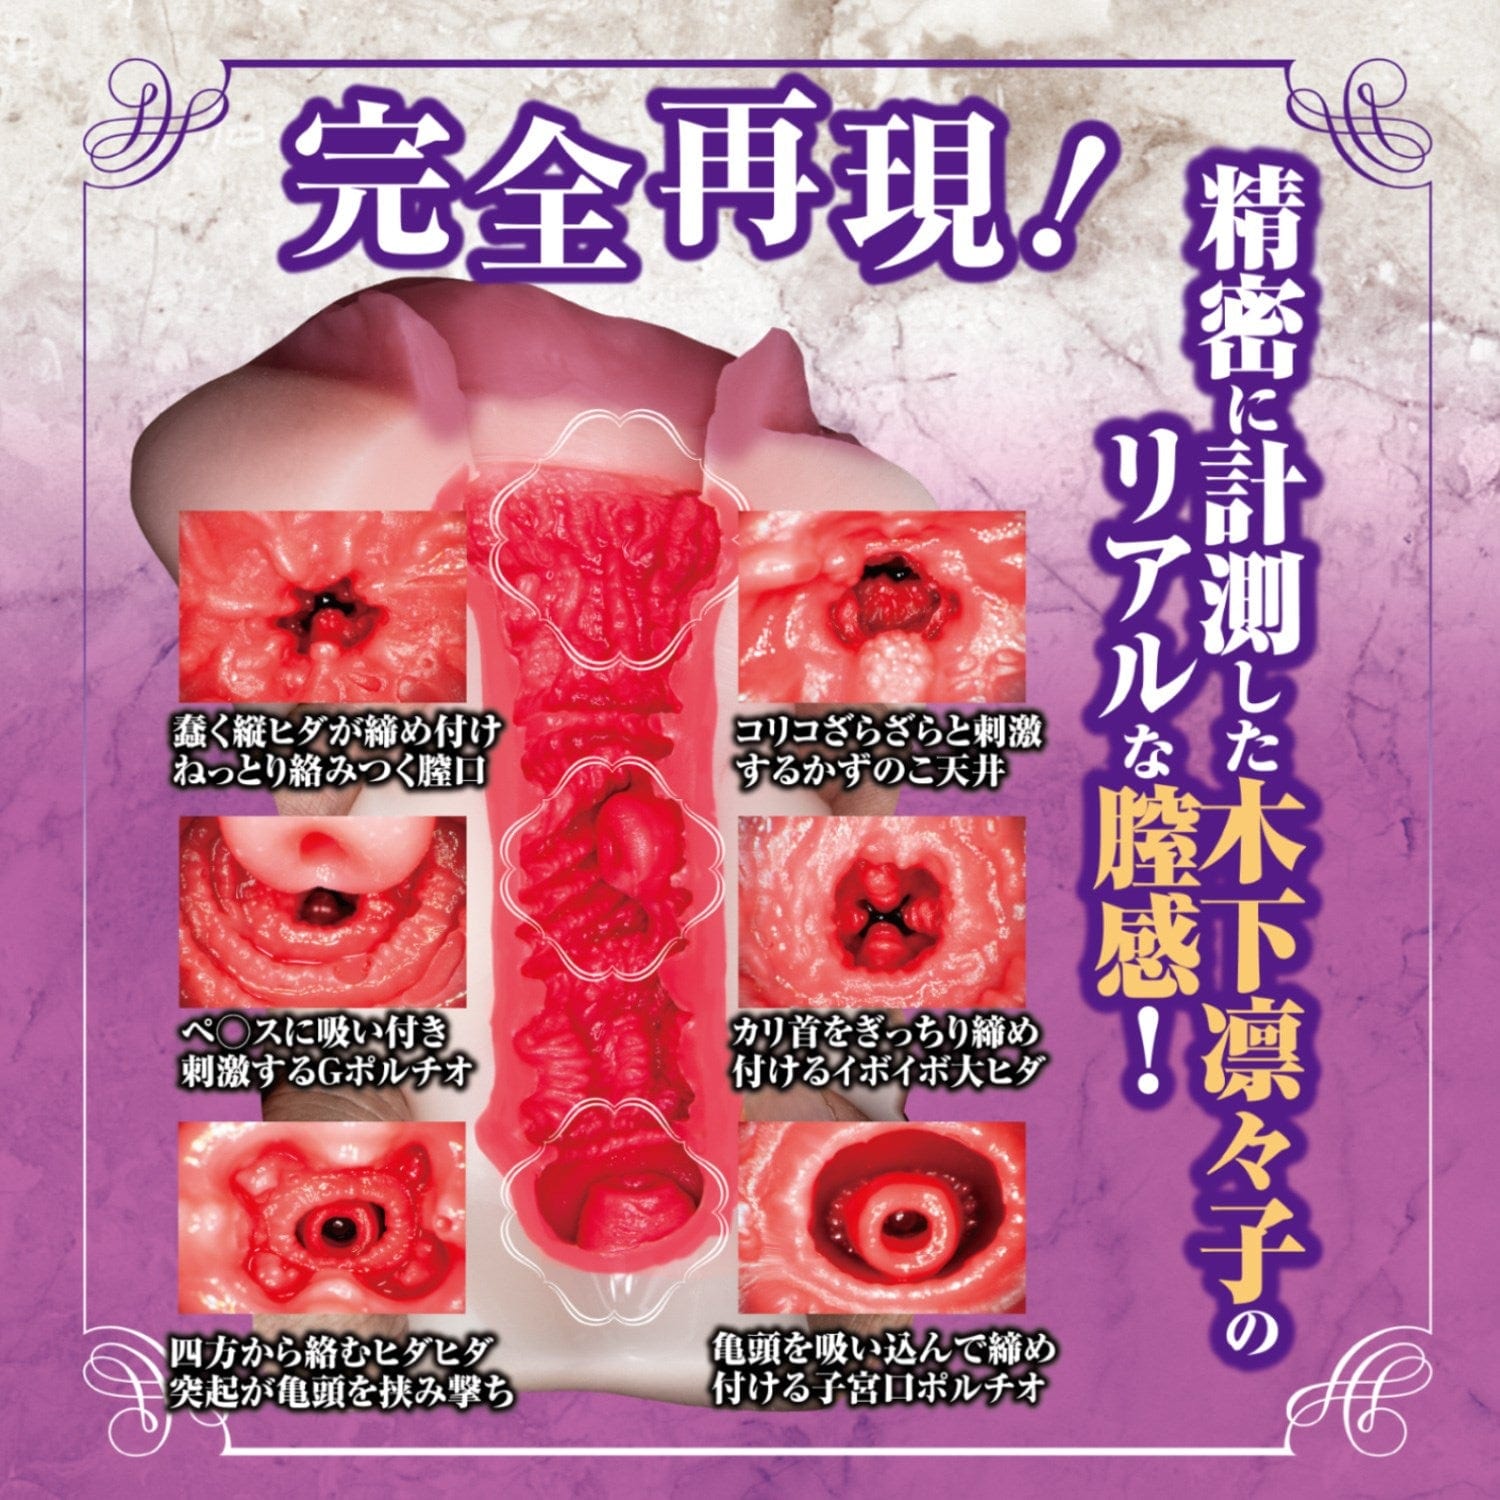 NPG - Mature Woman Star Ririko Kinoshita's Indecent Part Complete Replica Onahole (Beige) Masturbator Vagina (Non Vibration) 620220929 CherryAffairs